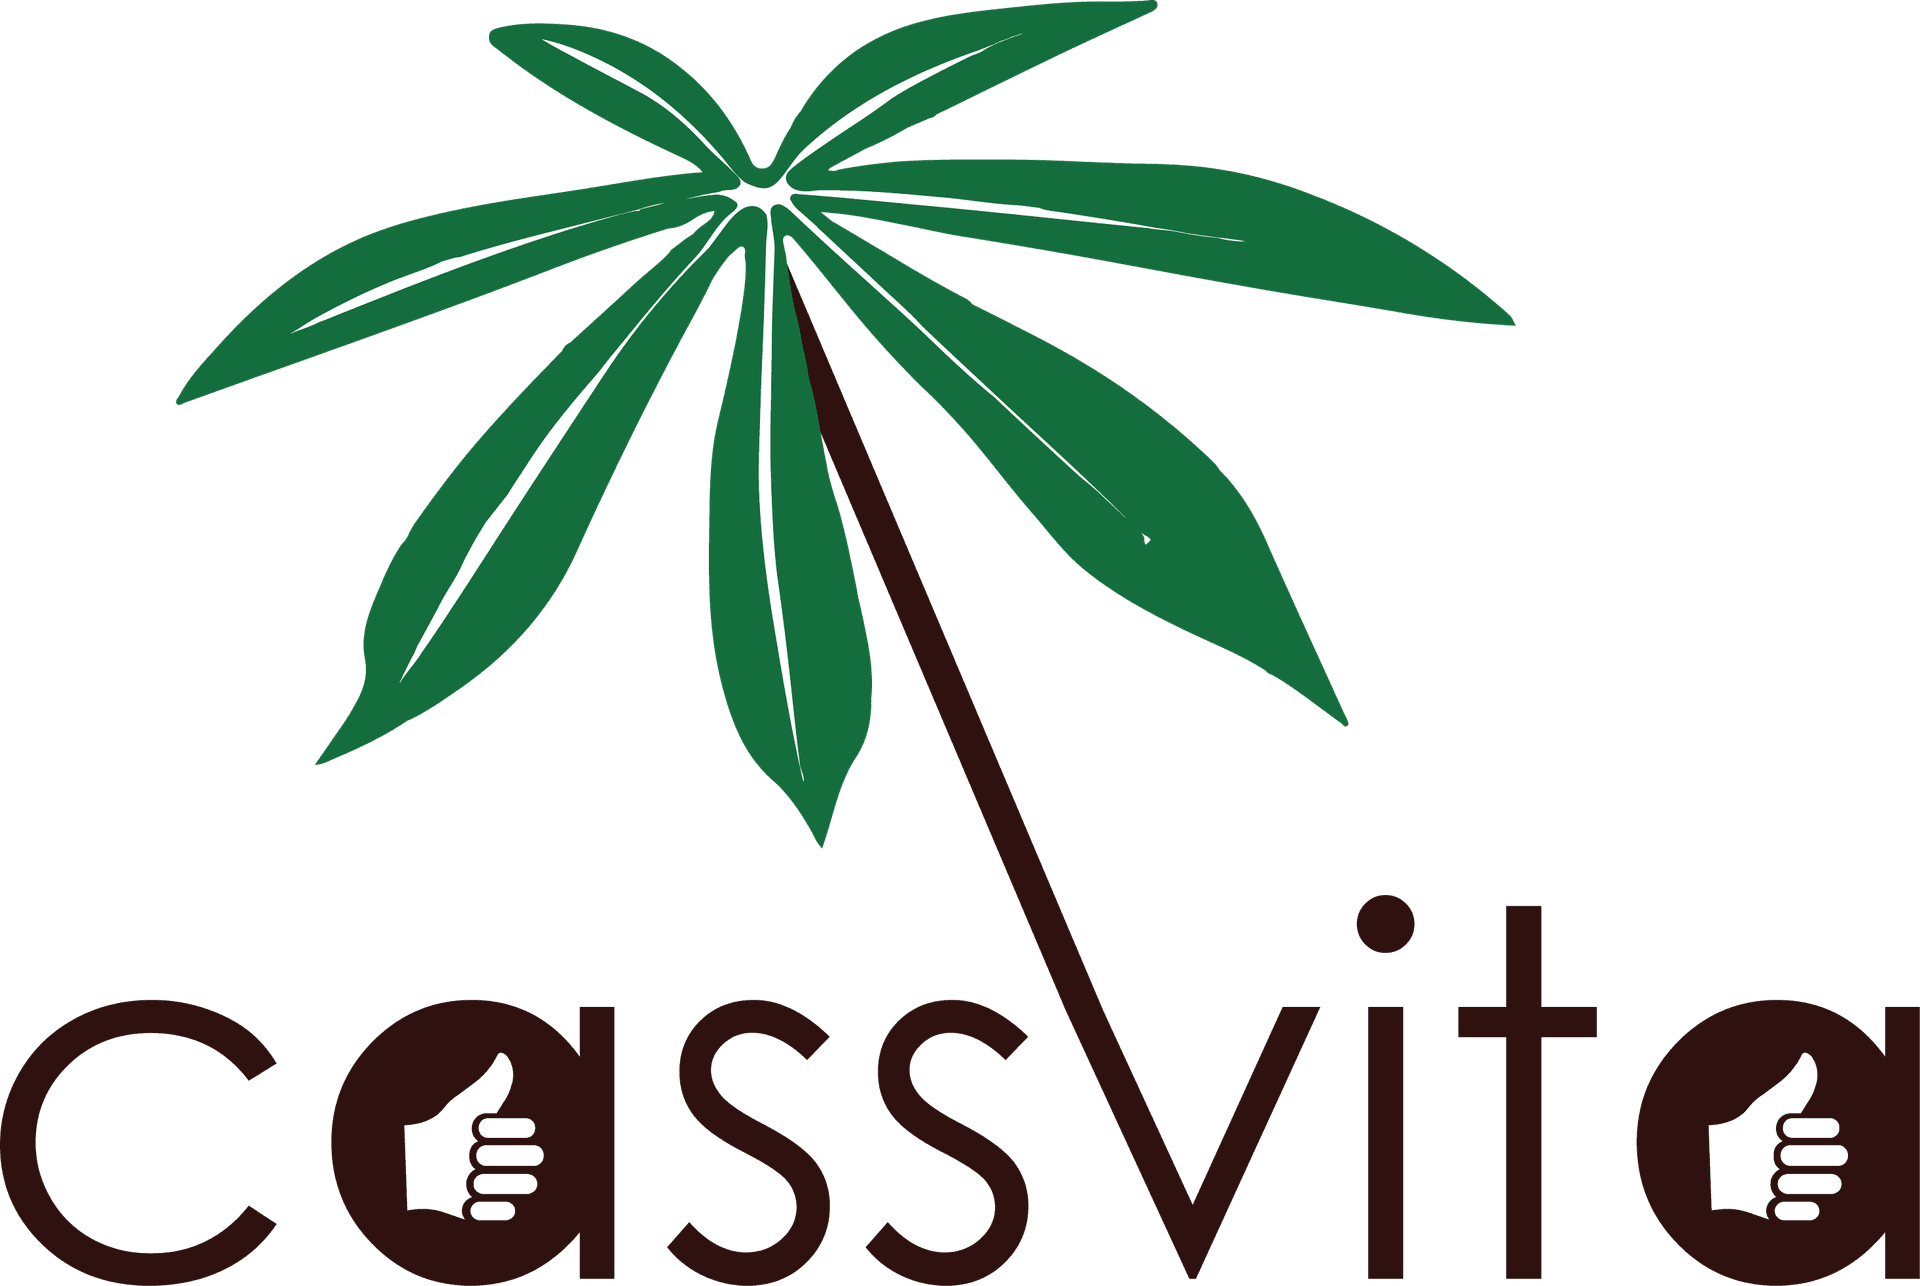 CassVita Inc.